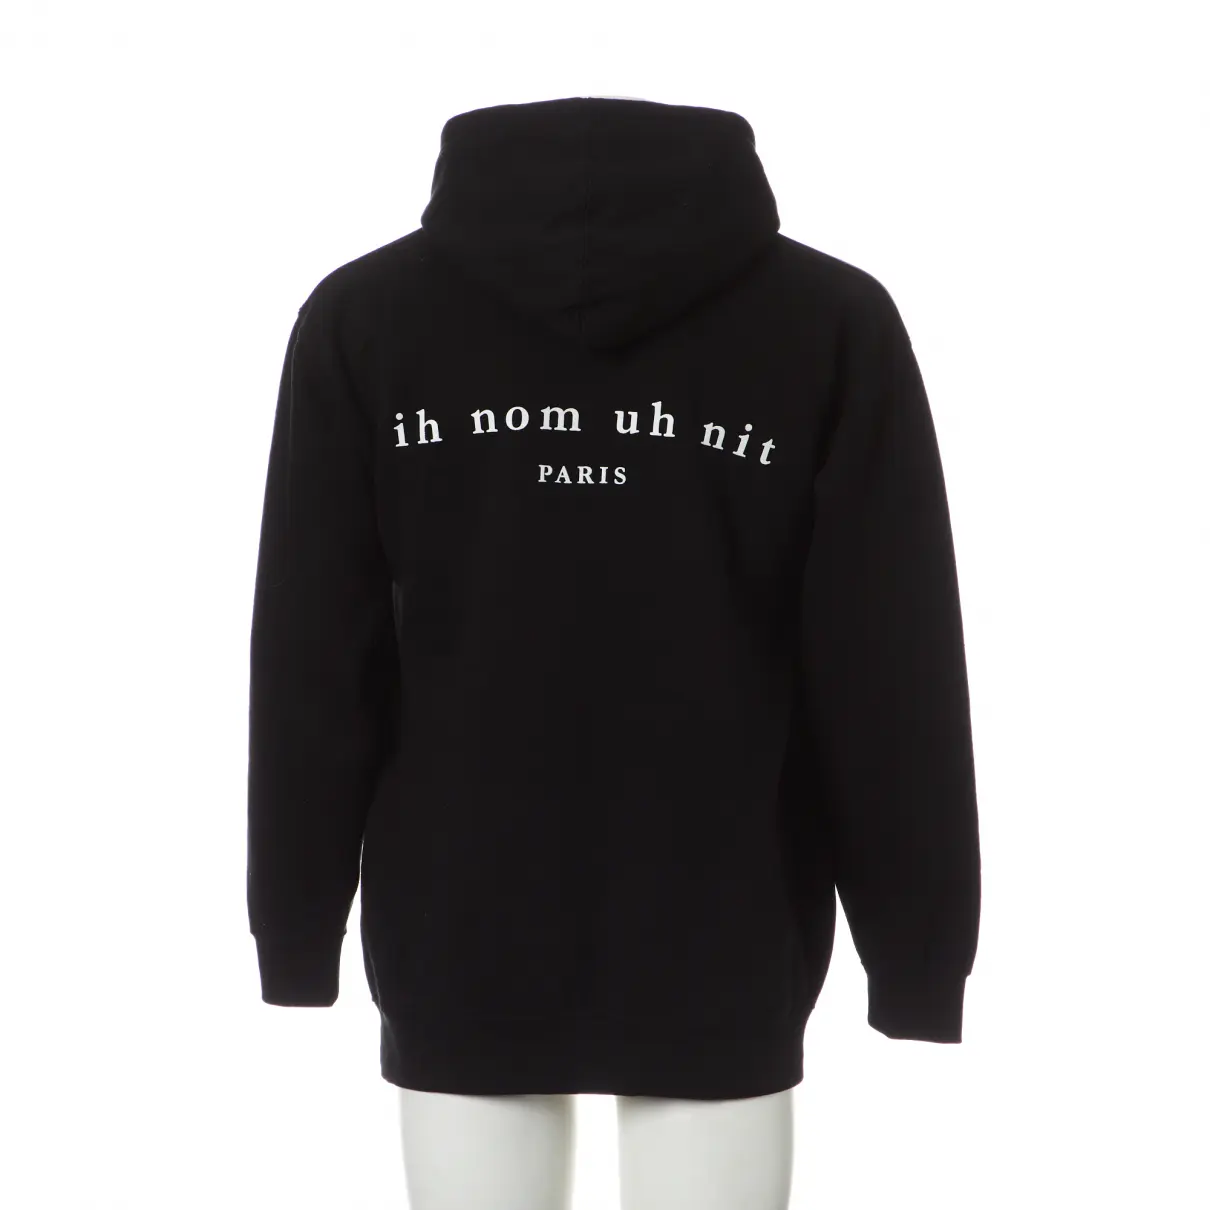 Buy ih nom uh nit Black Cotton Knitwear & Sweatshirt online